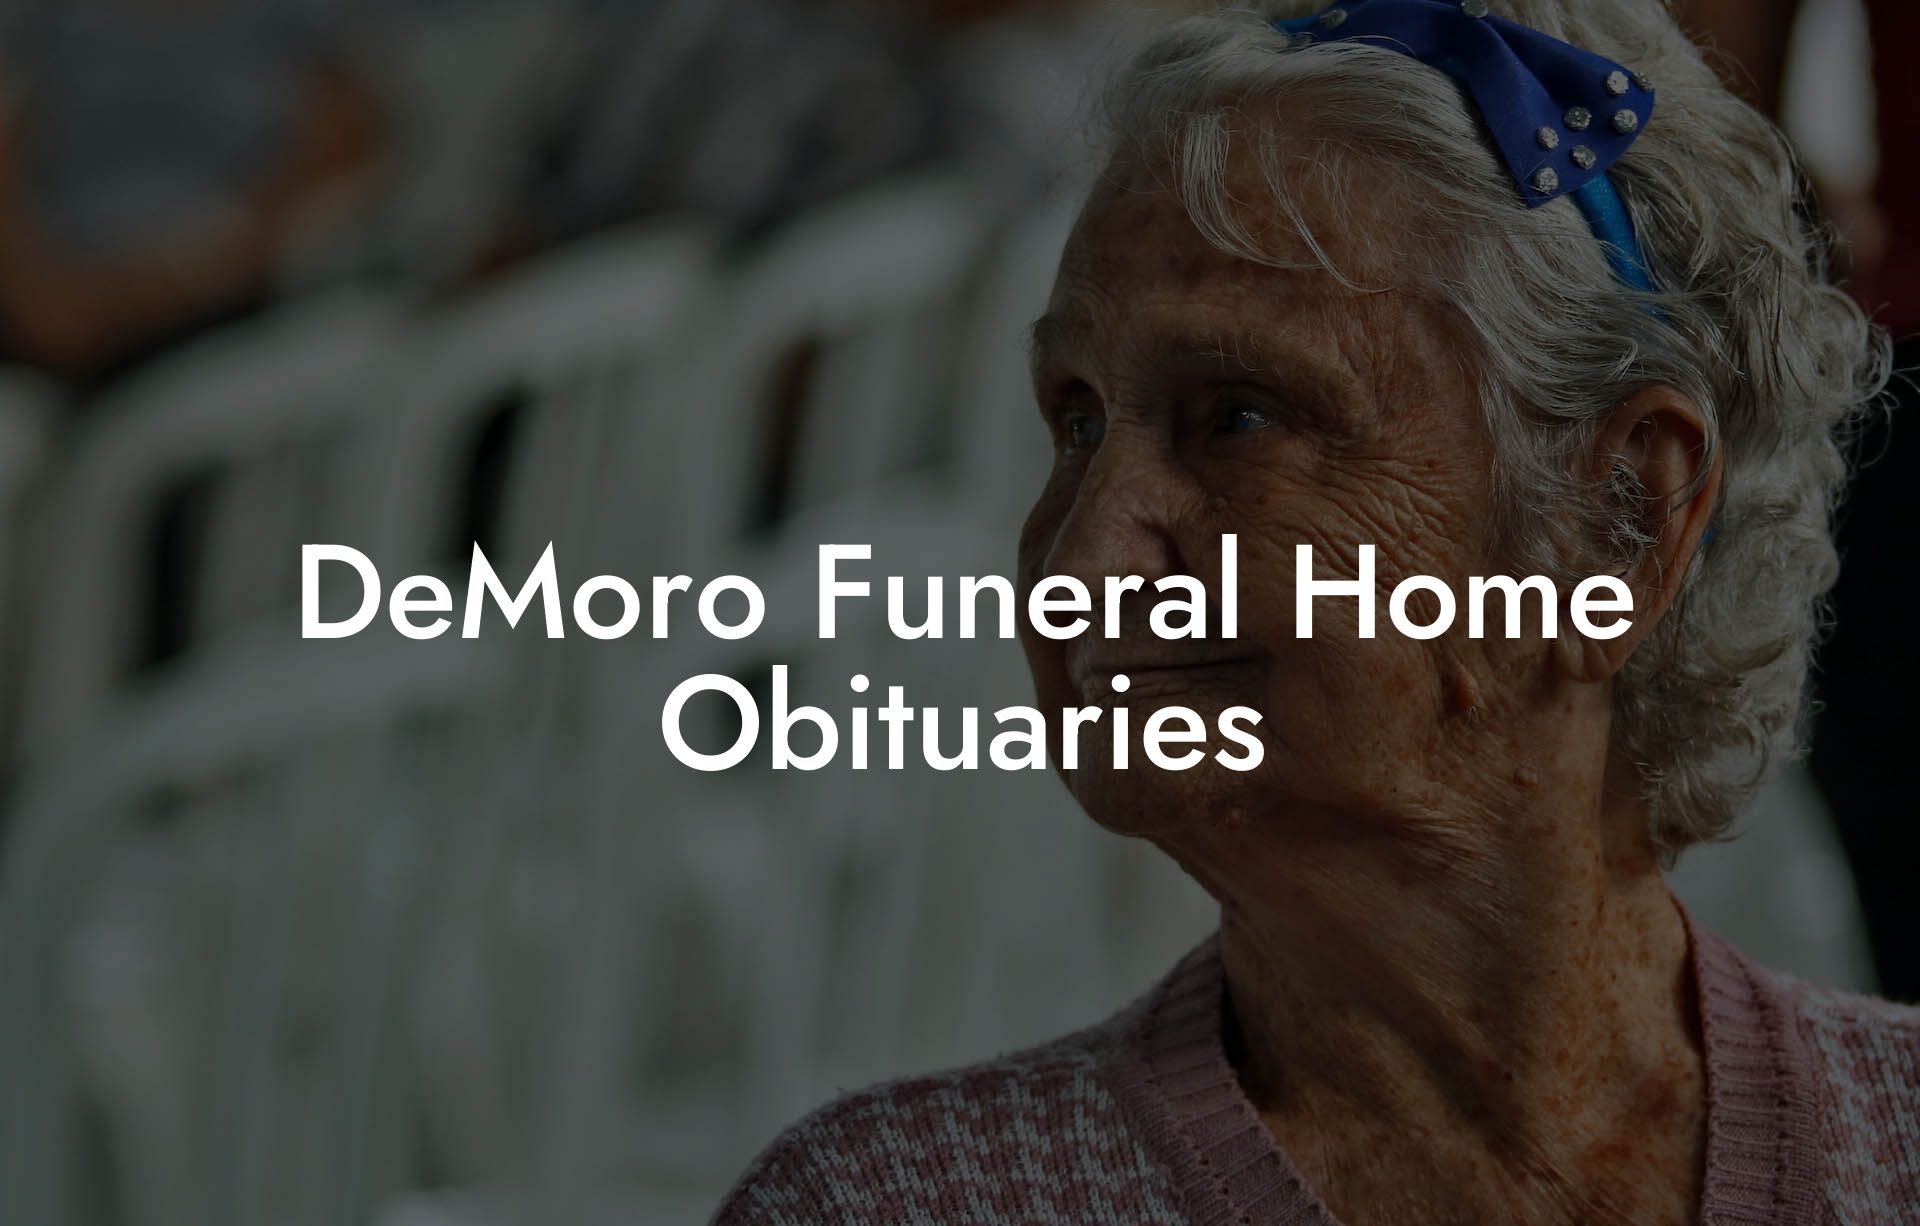 DeMoro Funeral Home Obituaries